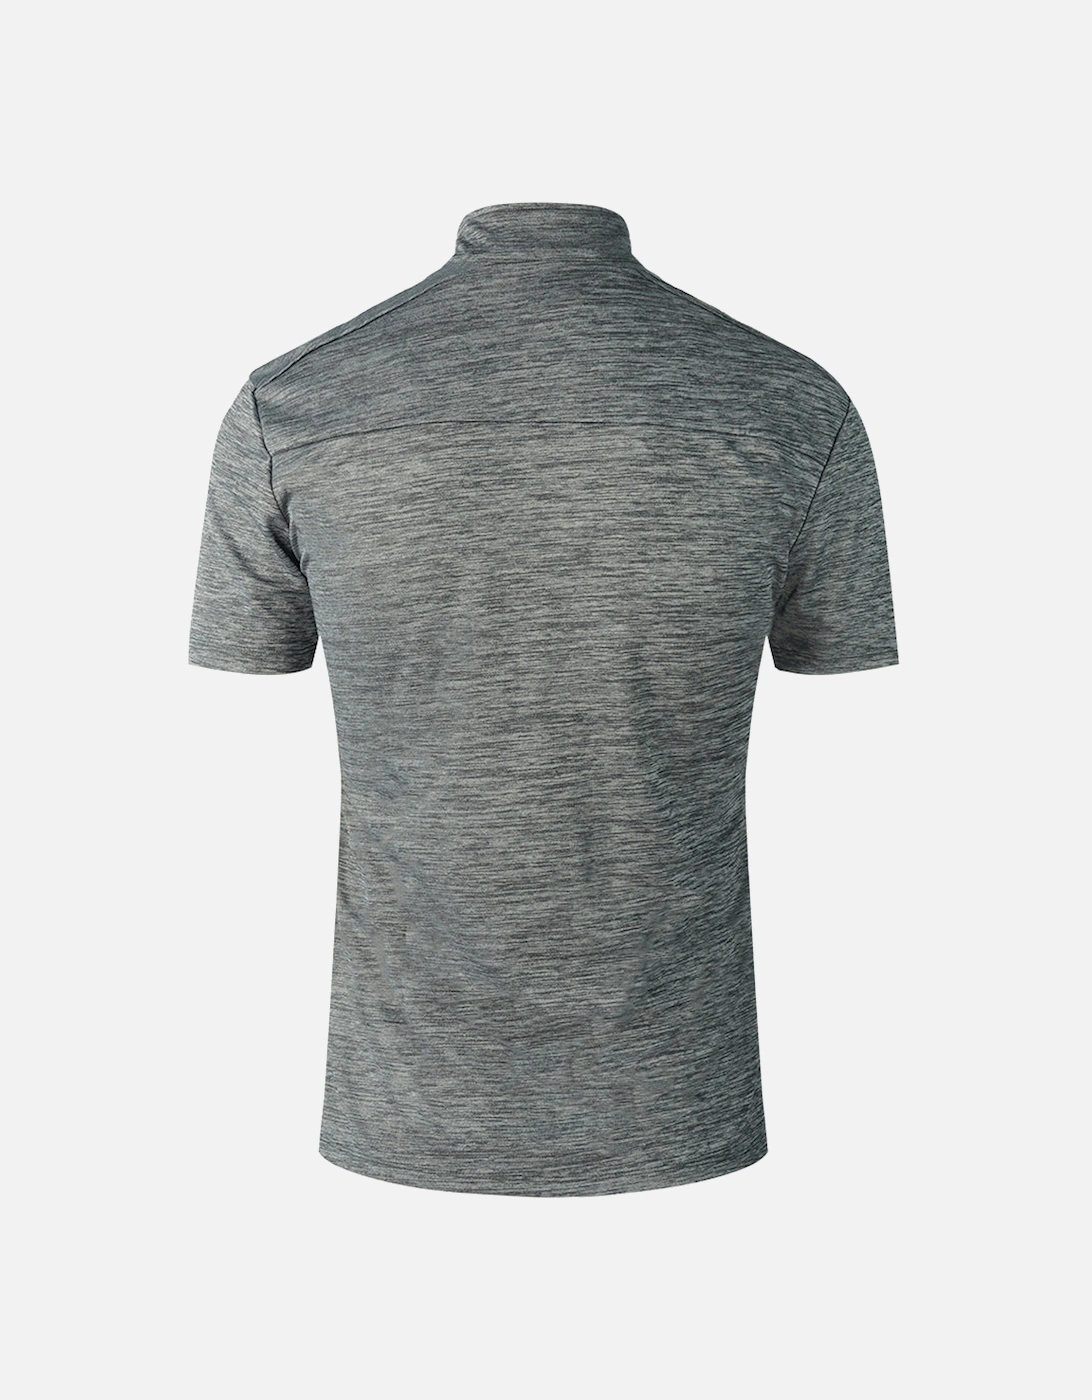 Cup Sweat Top Grey Polo Shirt